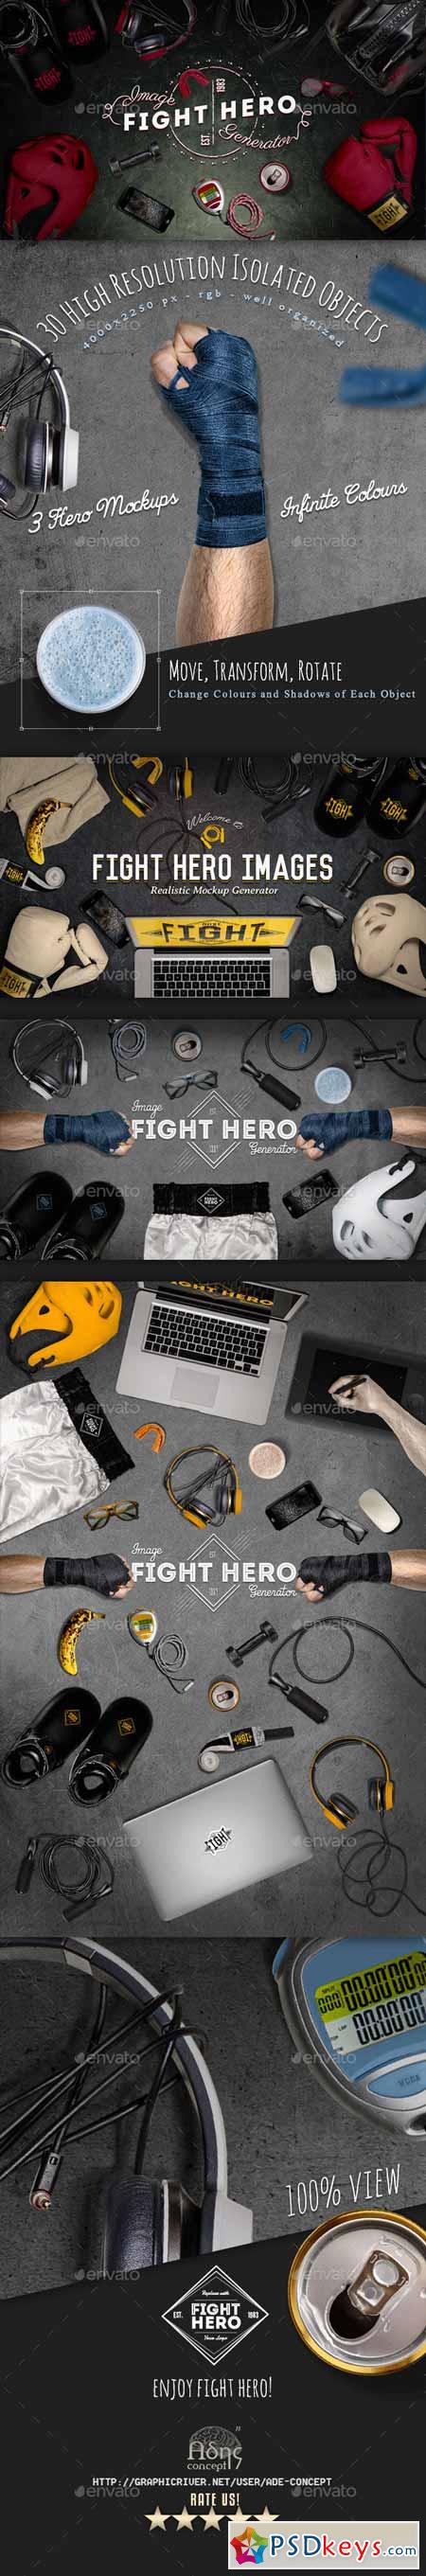 Fight Sport Hero Image Generator 12147639